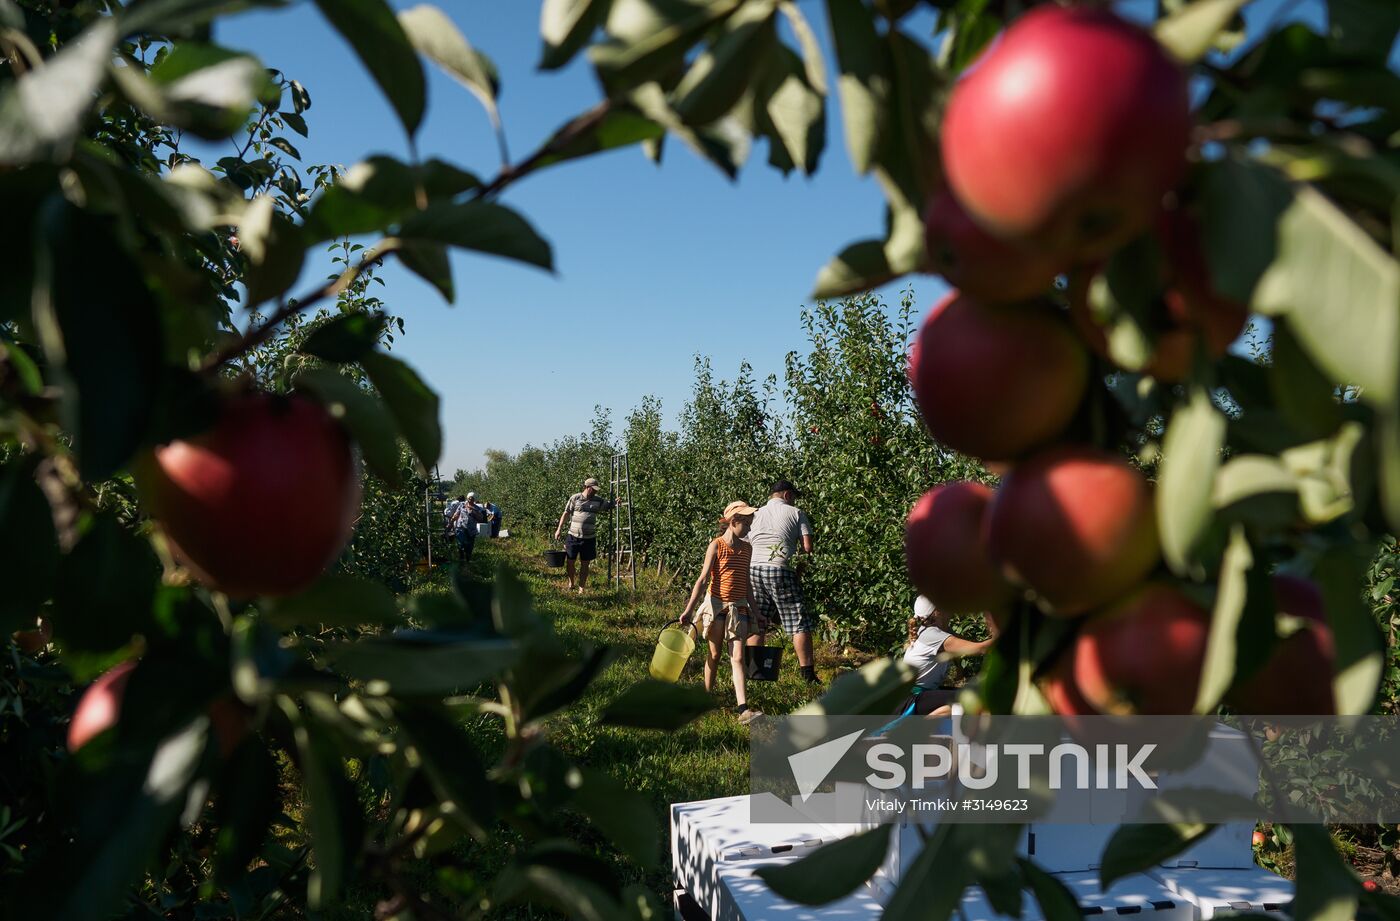 Picking apples in Russia's Krasnodar Territory